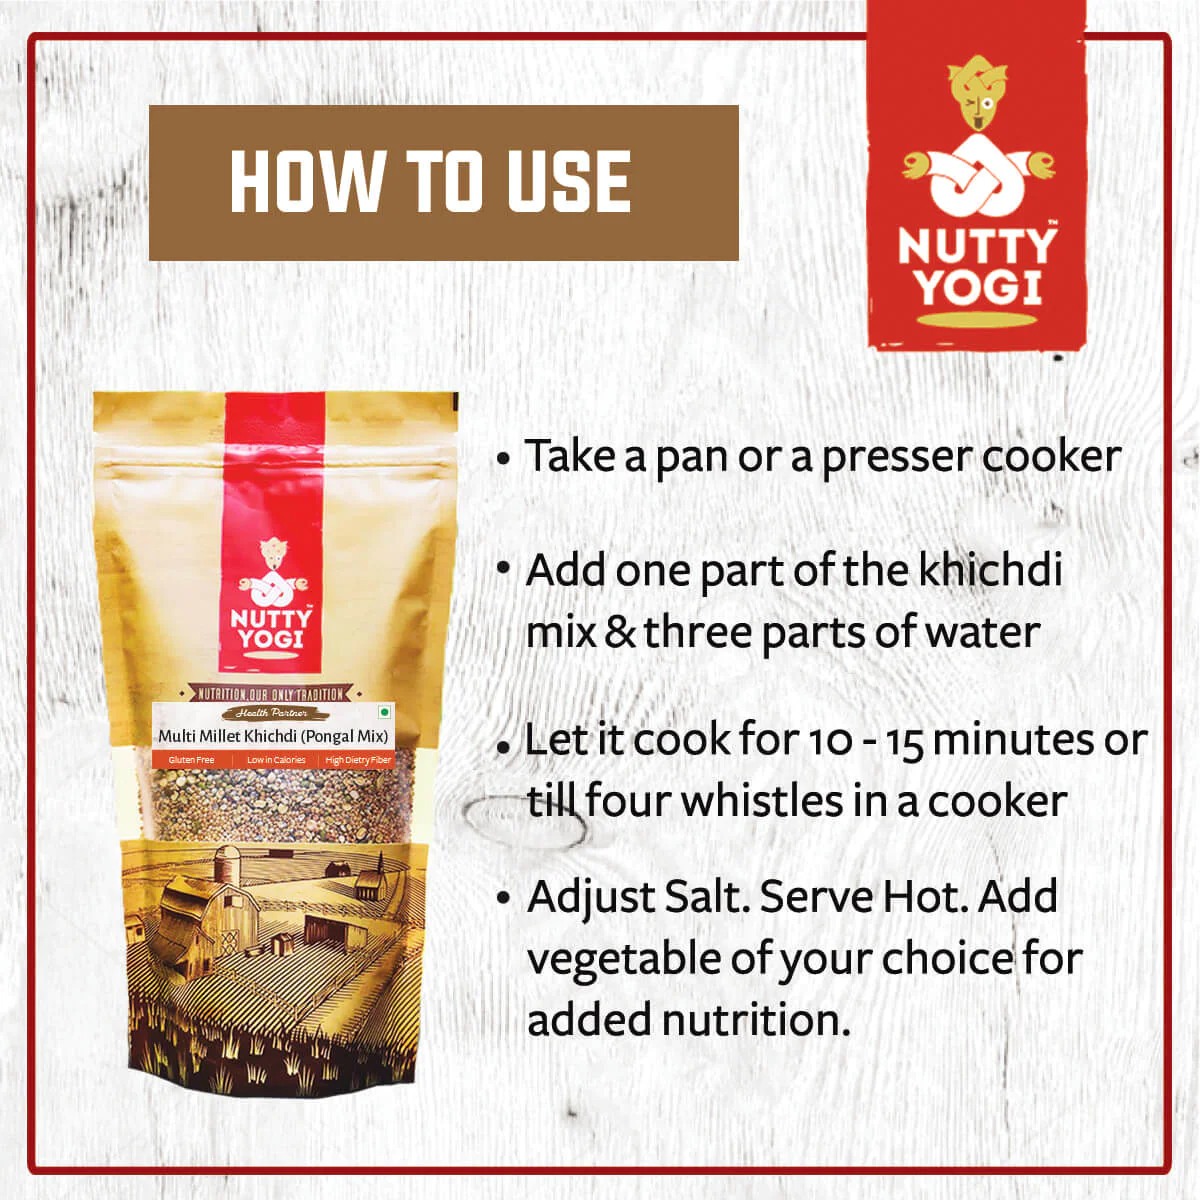 Product: Nutty Yogi Multi Millet Khichdi / Pongal Mix